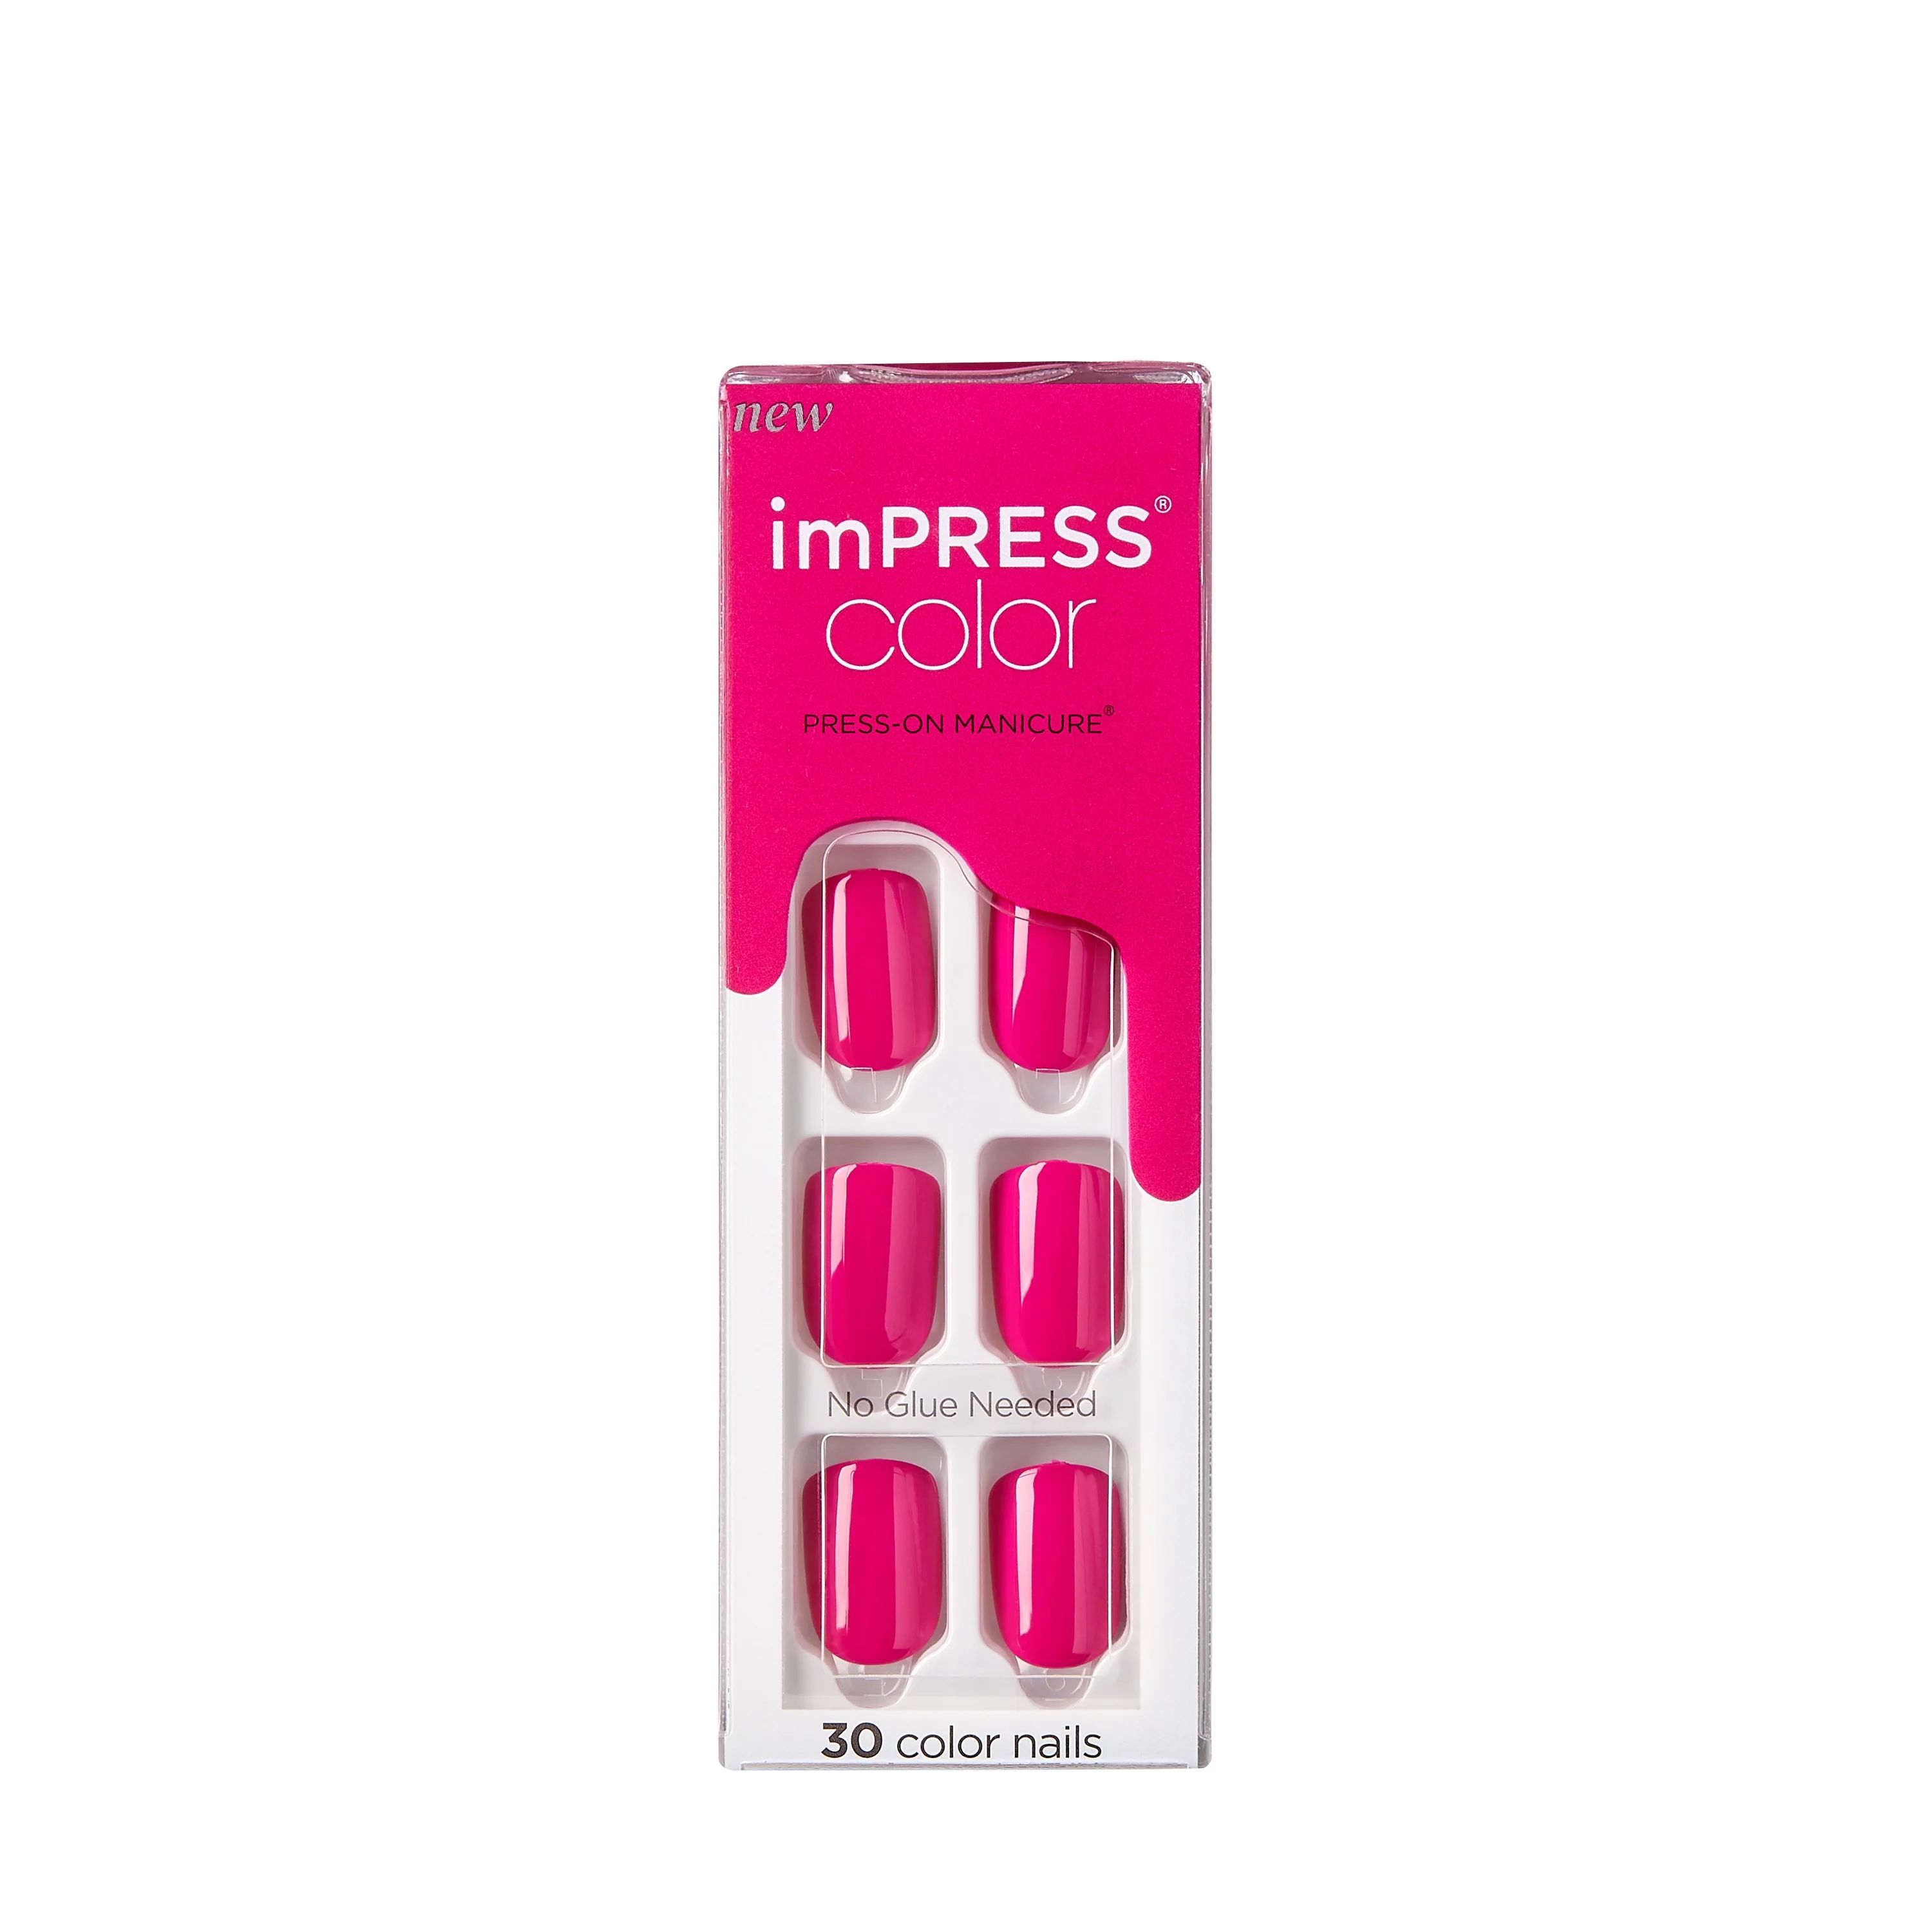 KISS imPRESS Color Press-On Nails, ‘Orchid Festival’, 30 Count | Walmart (US)